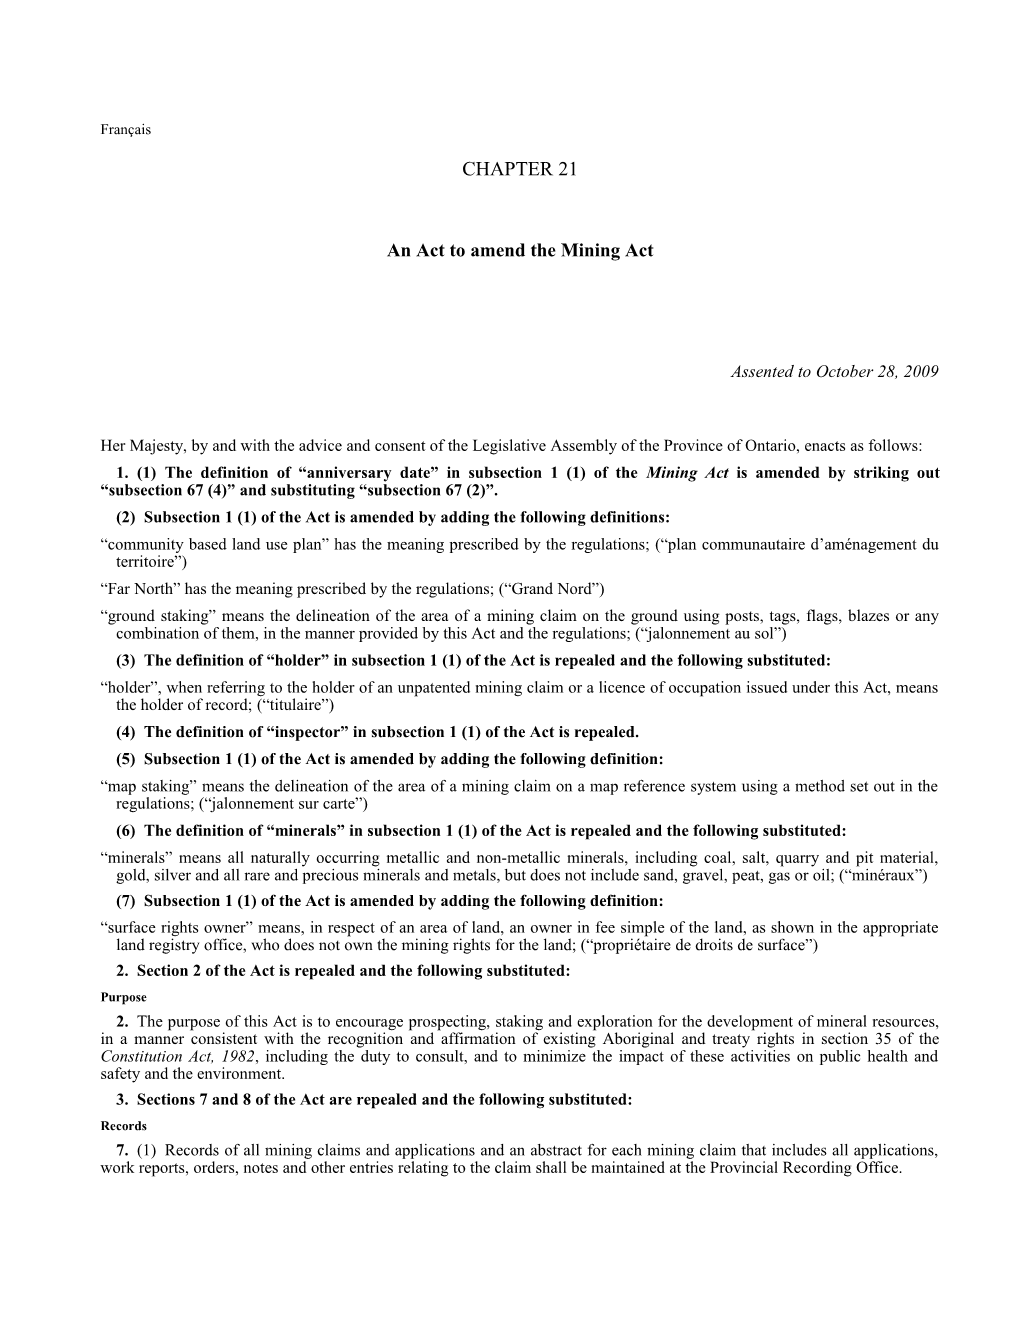 Mining Amendment Act, 2009, S.O. 2009, C. 21 - Bill 173